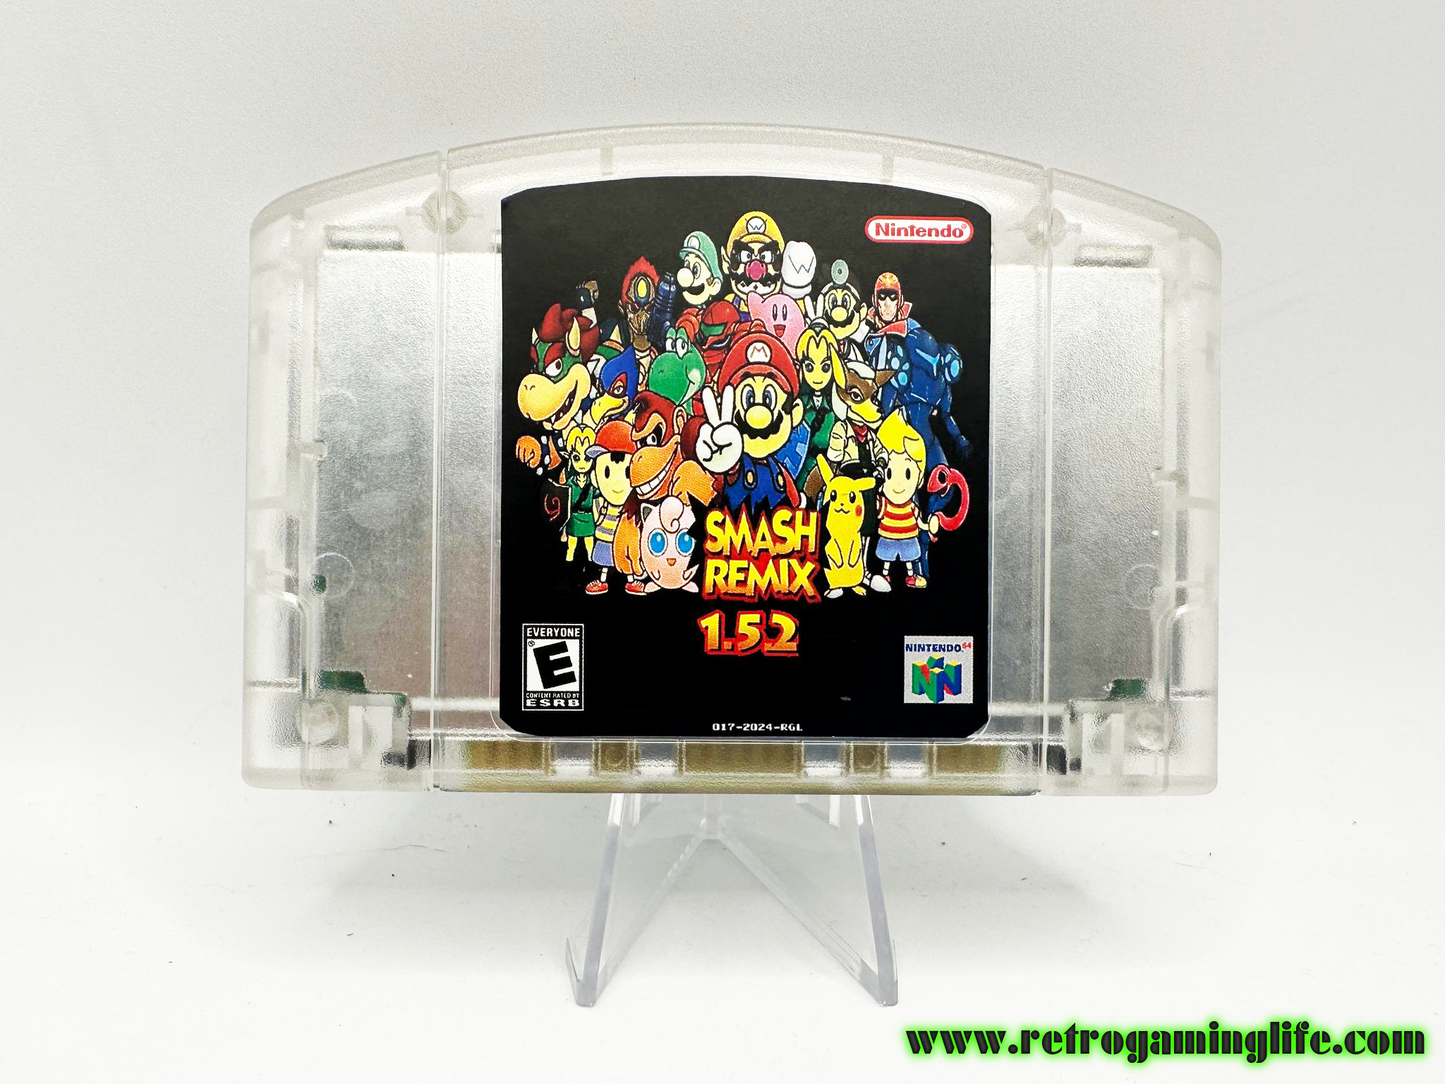 Smash Bros Remix 1.5.2 Nintendo 64 Reproduction Cart